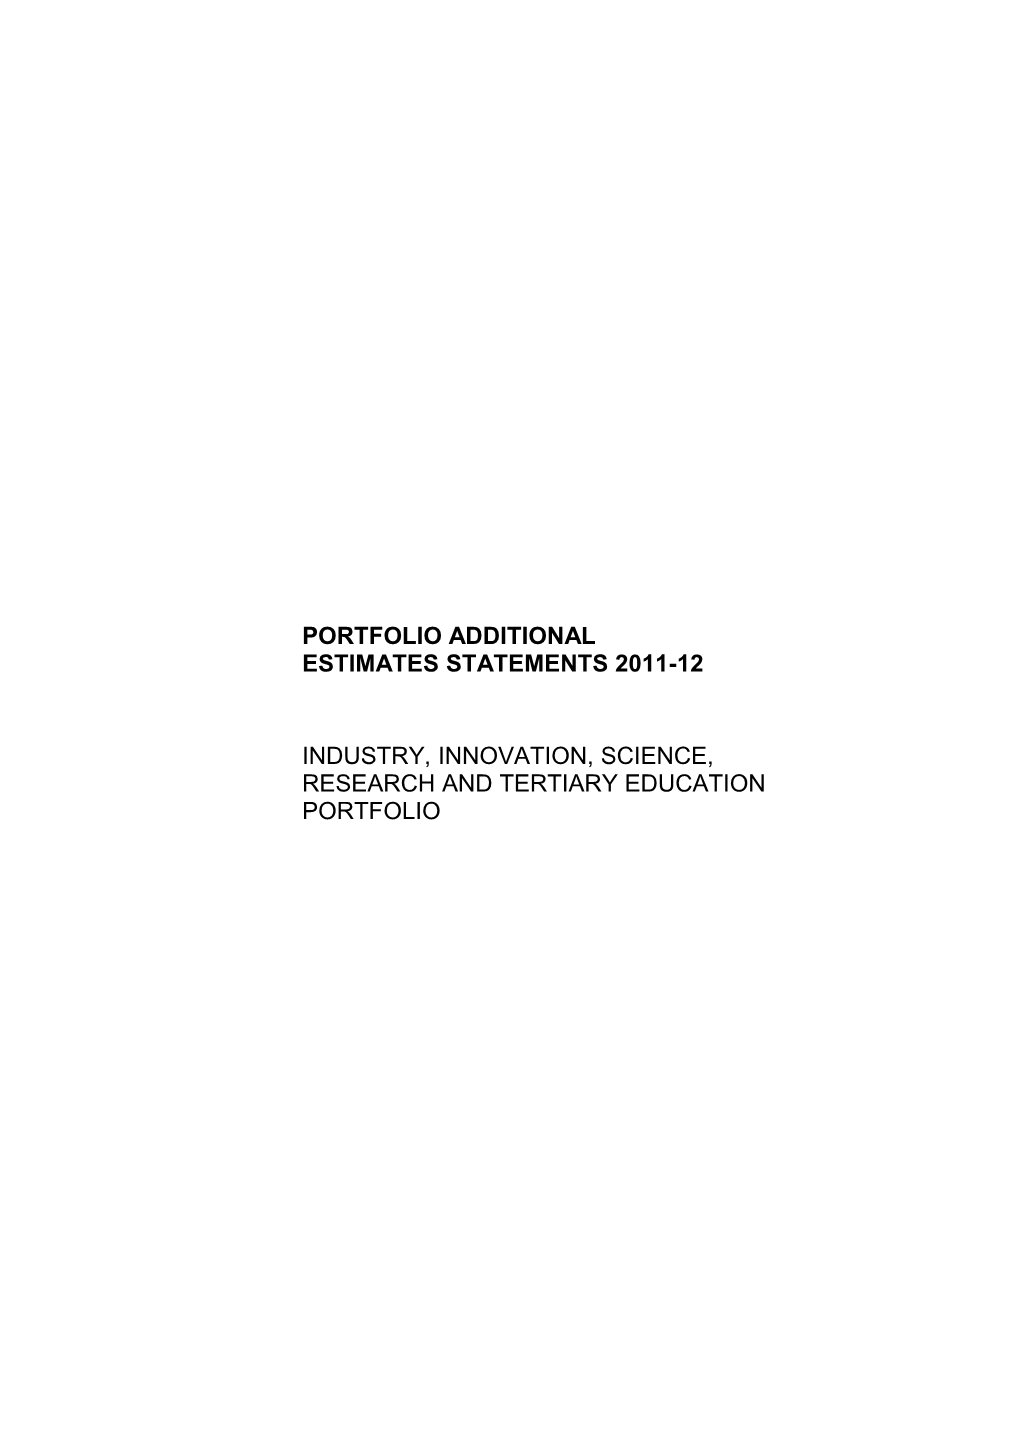 Portfolio Additional Estimates Statements 2011-12 s1